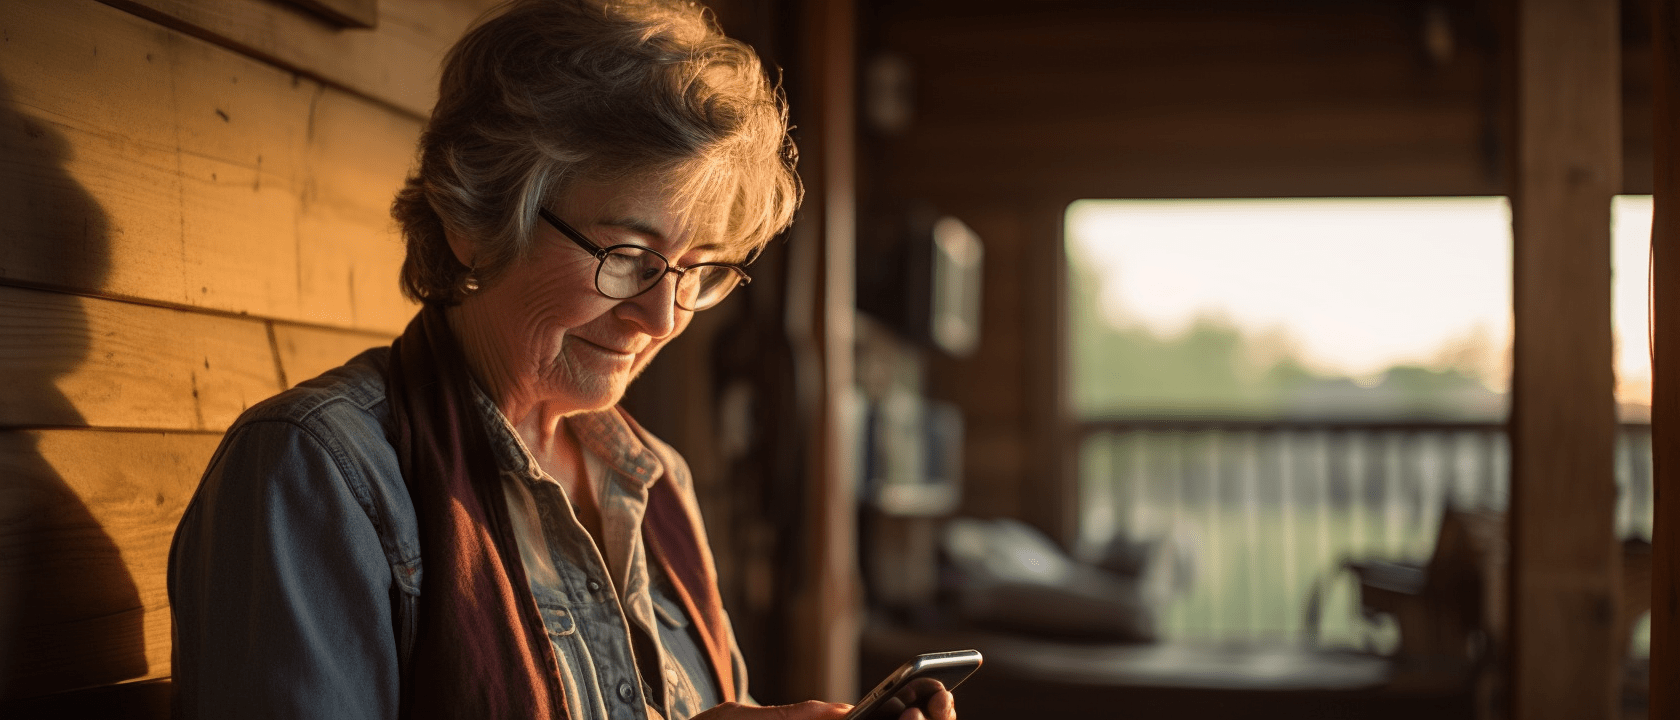 Grandma using Lifeline program to stay connected